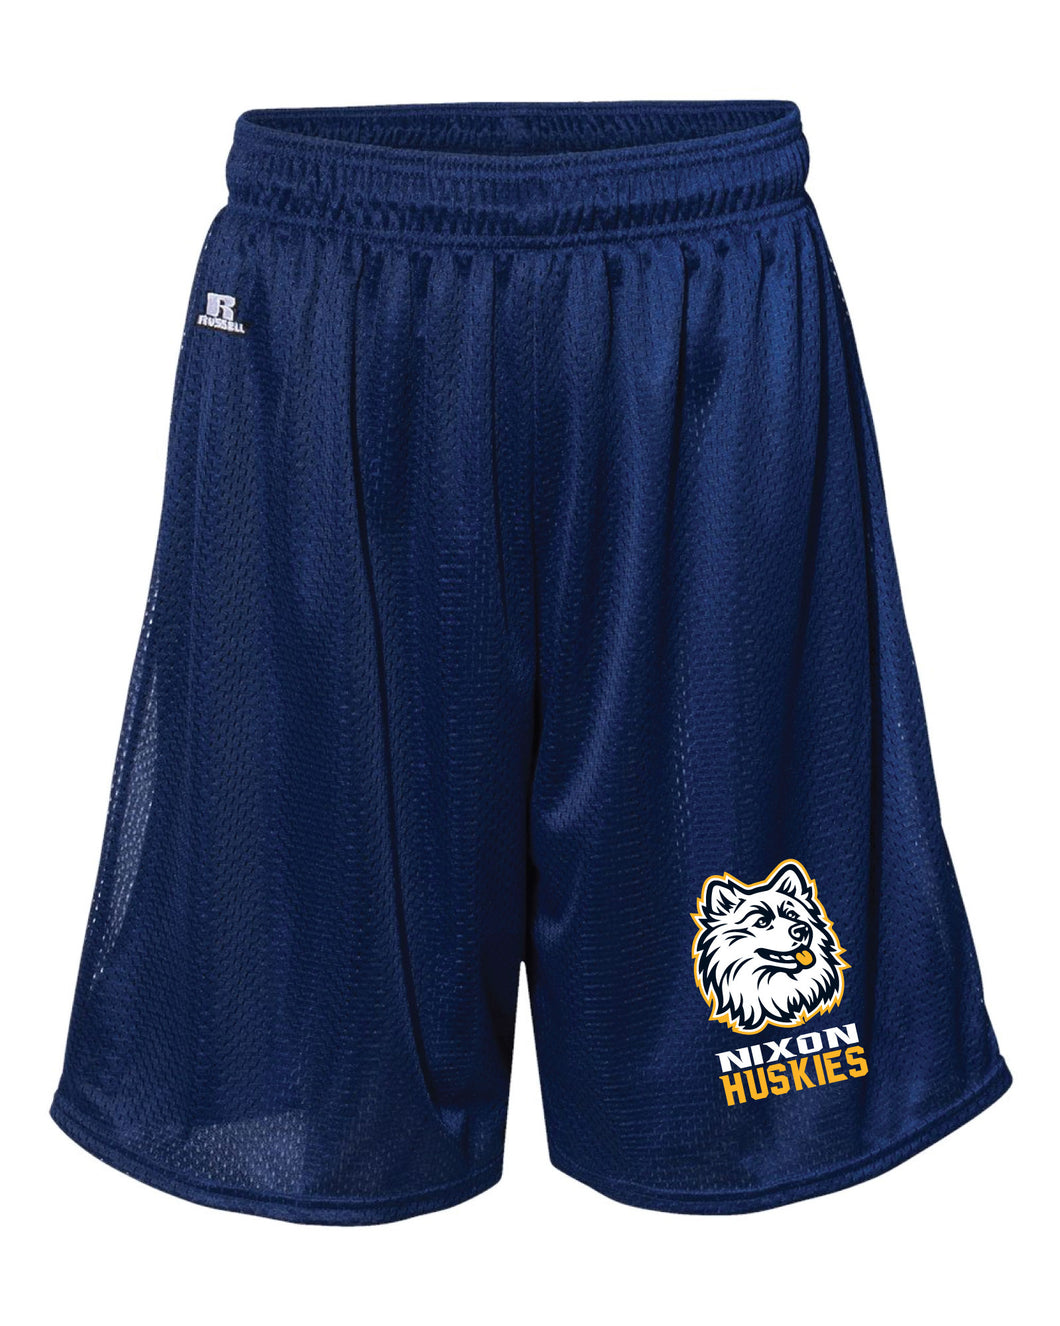 Nixon Huskies School Russell Athletic Tech Shorts - Navy - 5KounT